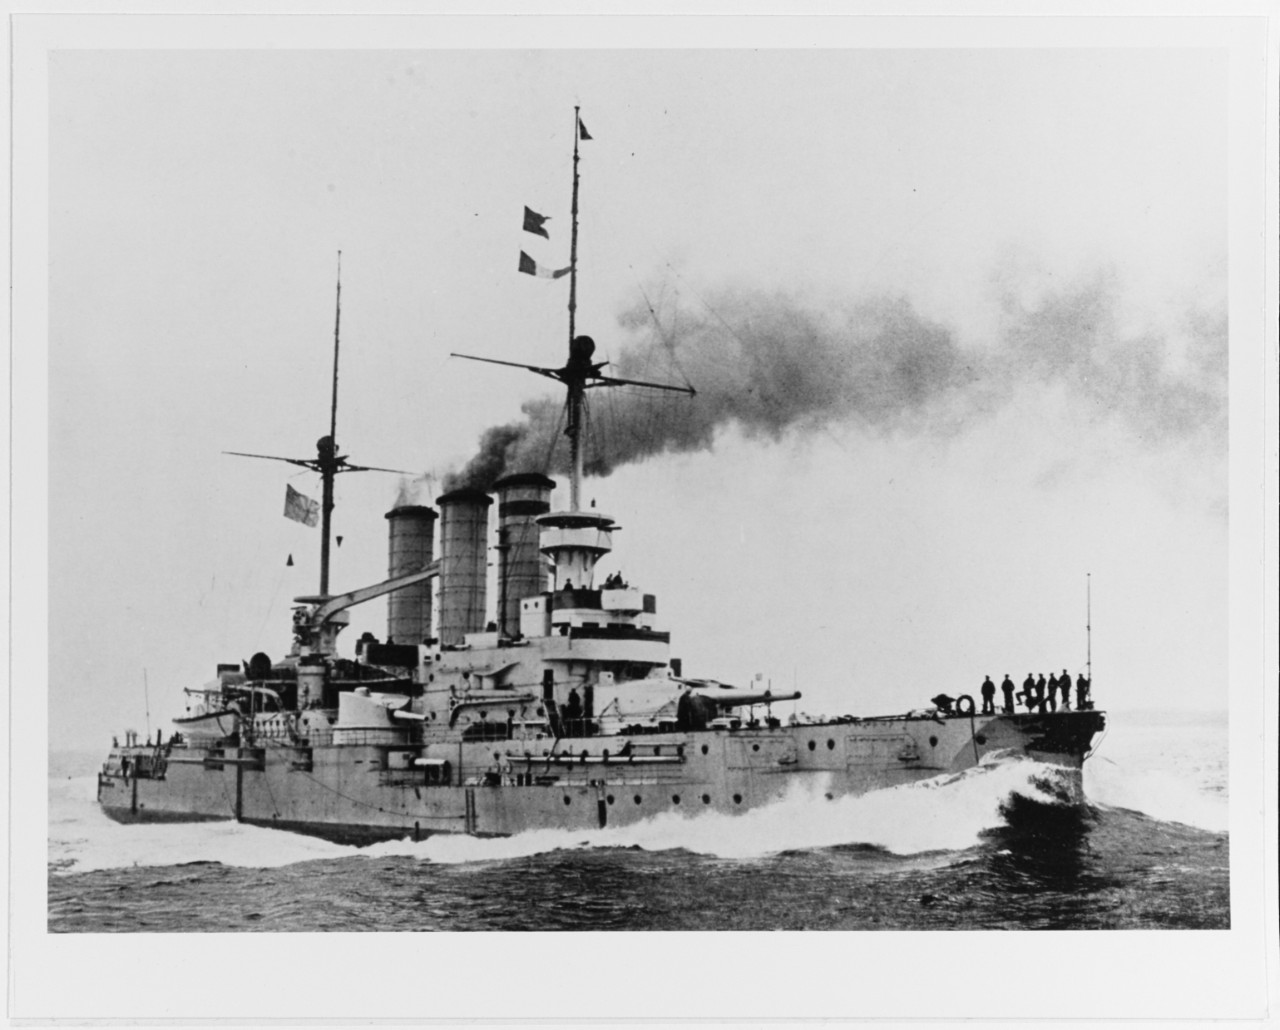 BRAUNSCHWEIG (German Battleship)